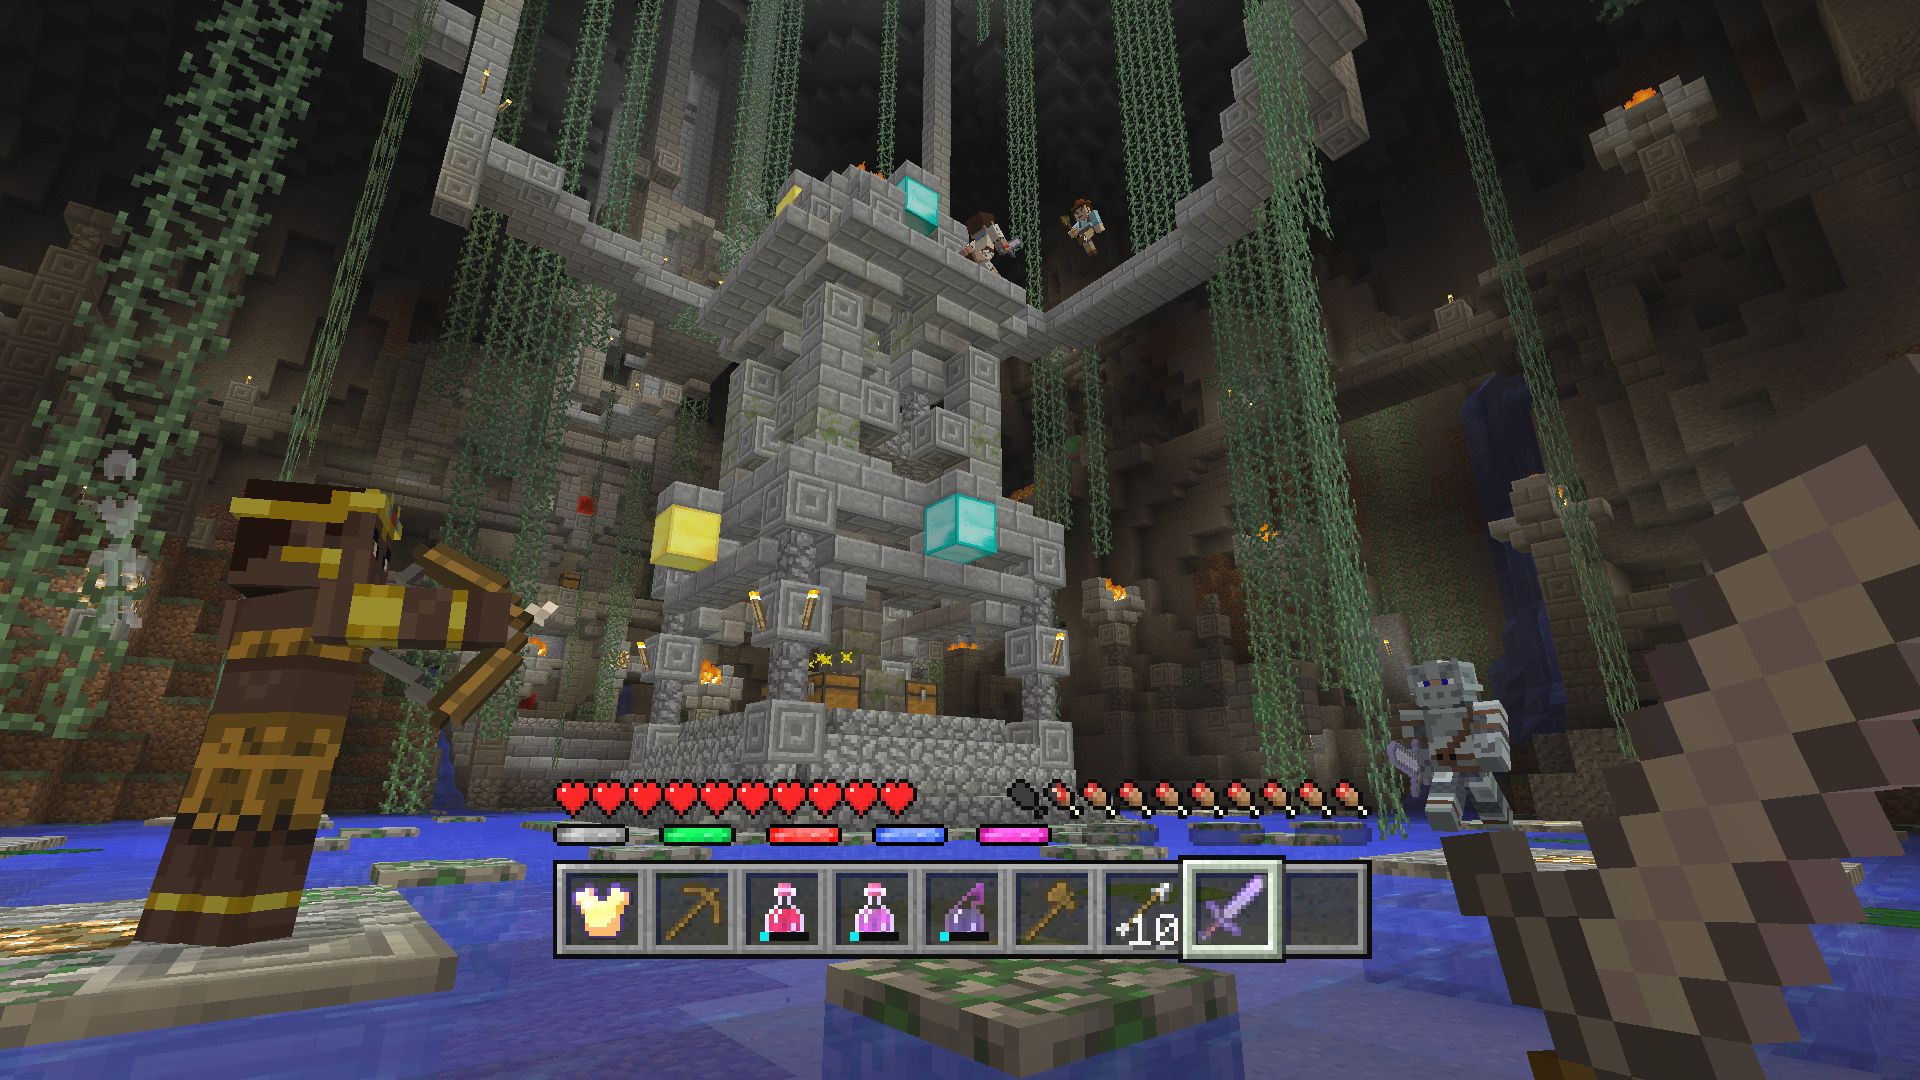 Скриншот Minecraft PREMIUM + СМЕНА НИКА, СКИНА (Гарантия) MOJANG